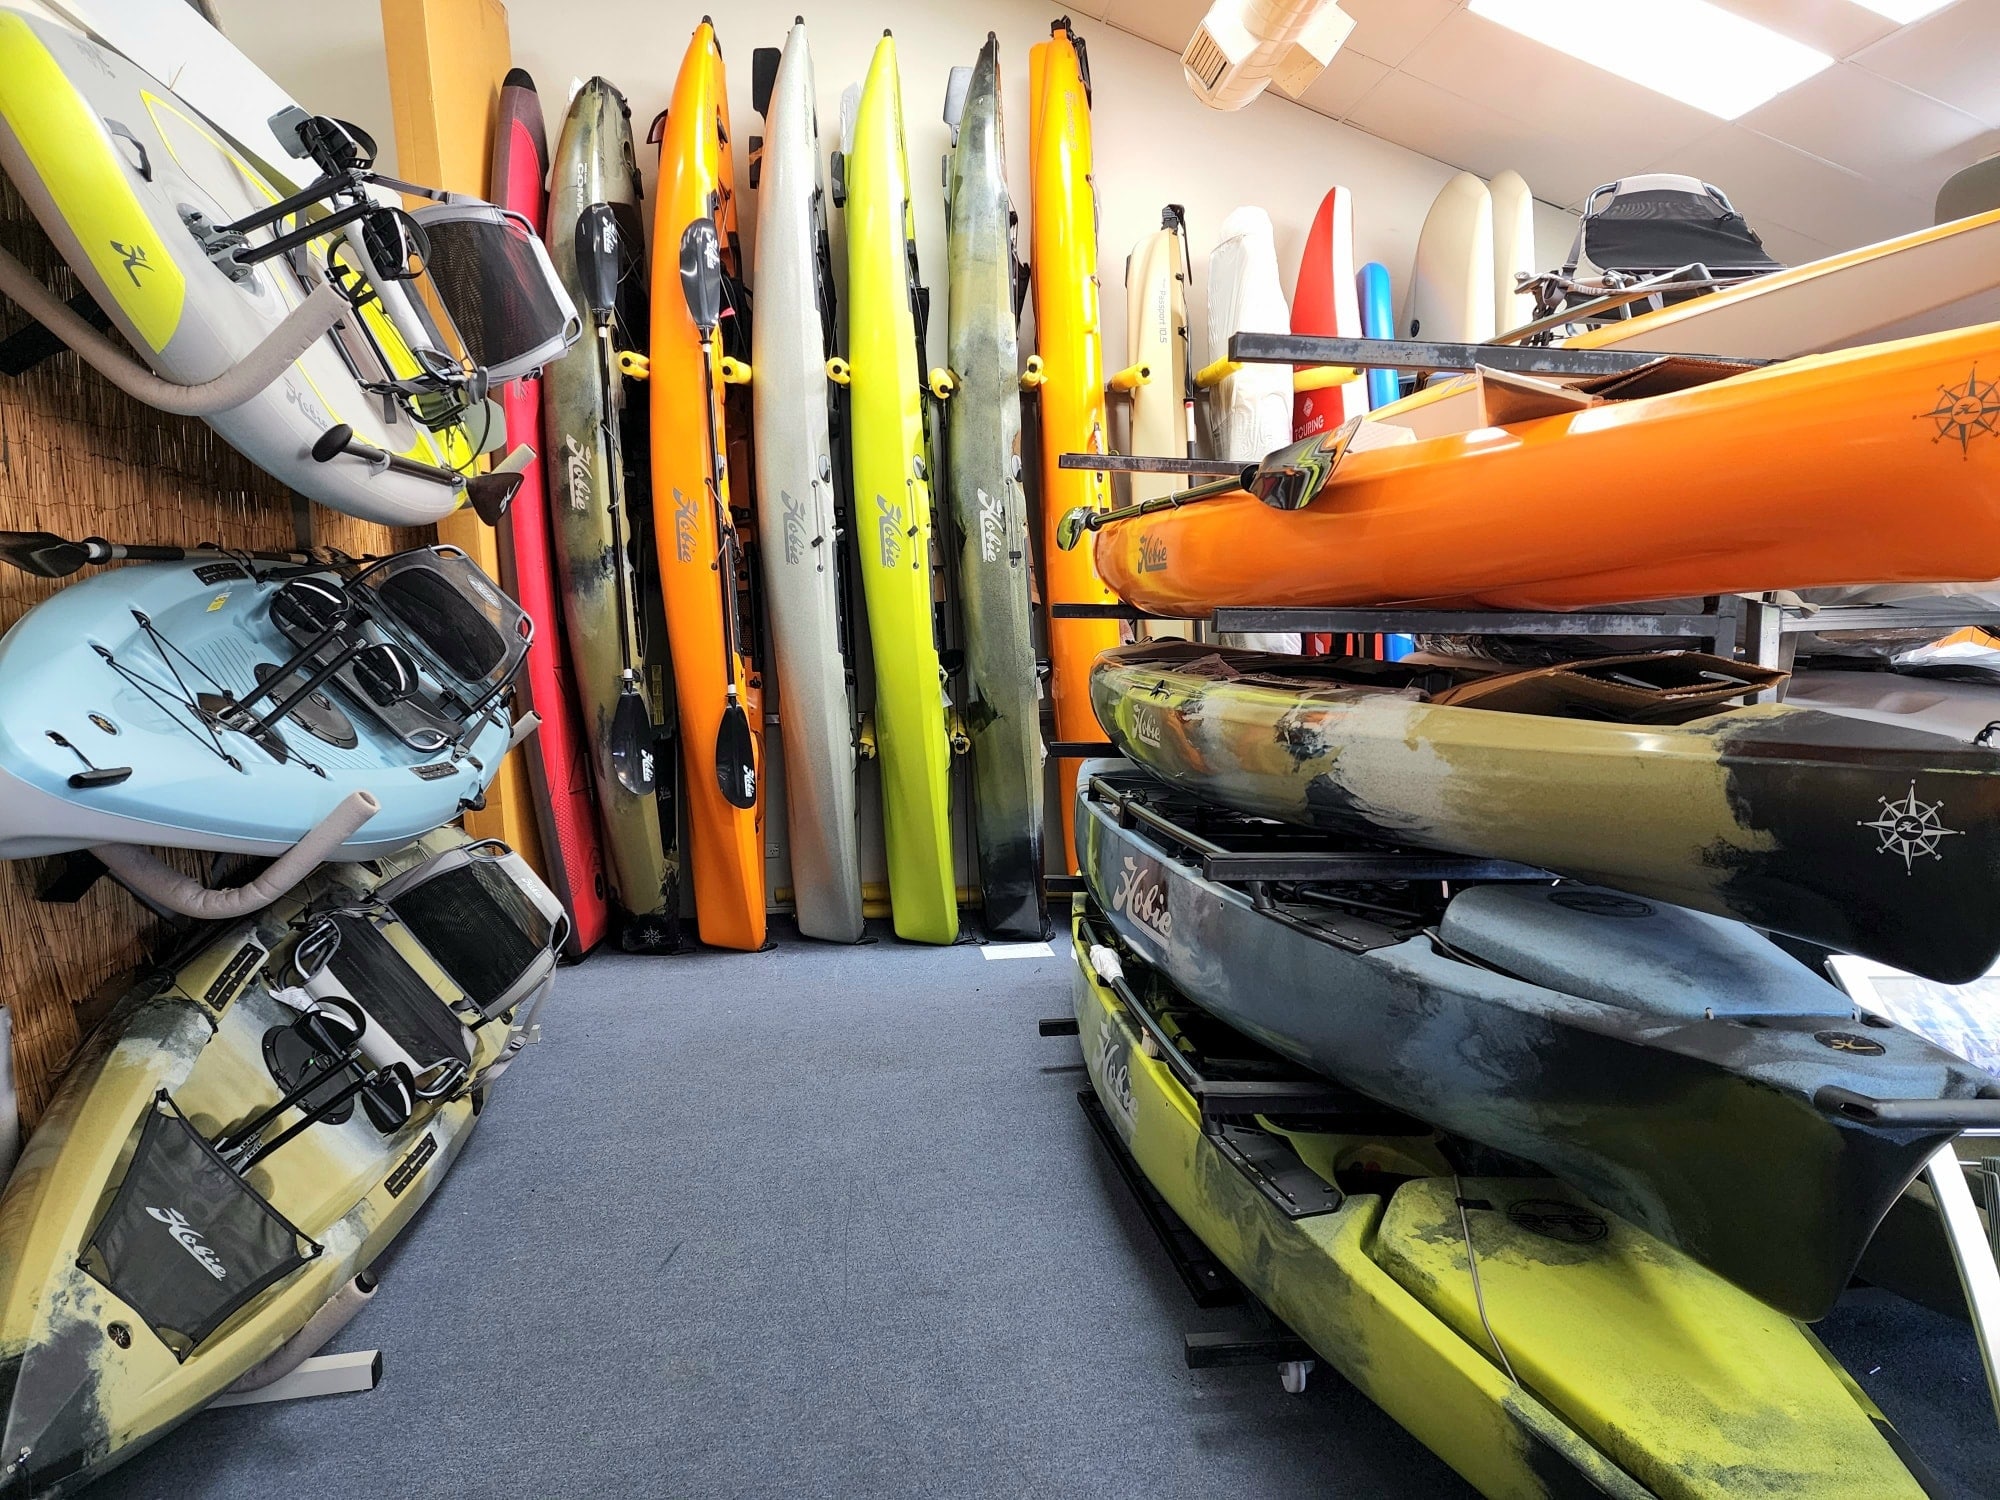 Racks of Hobie kayaks at the Hunter Water Sports showroom